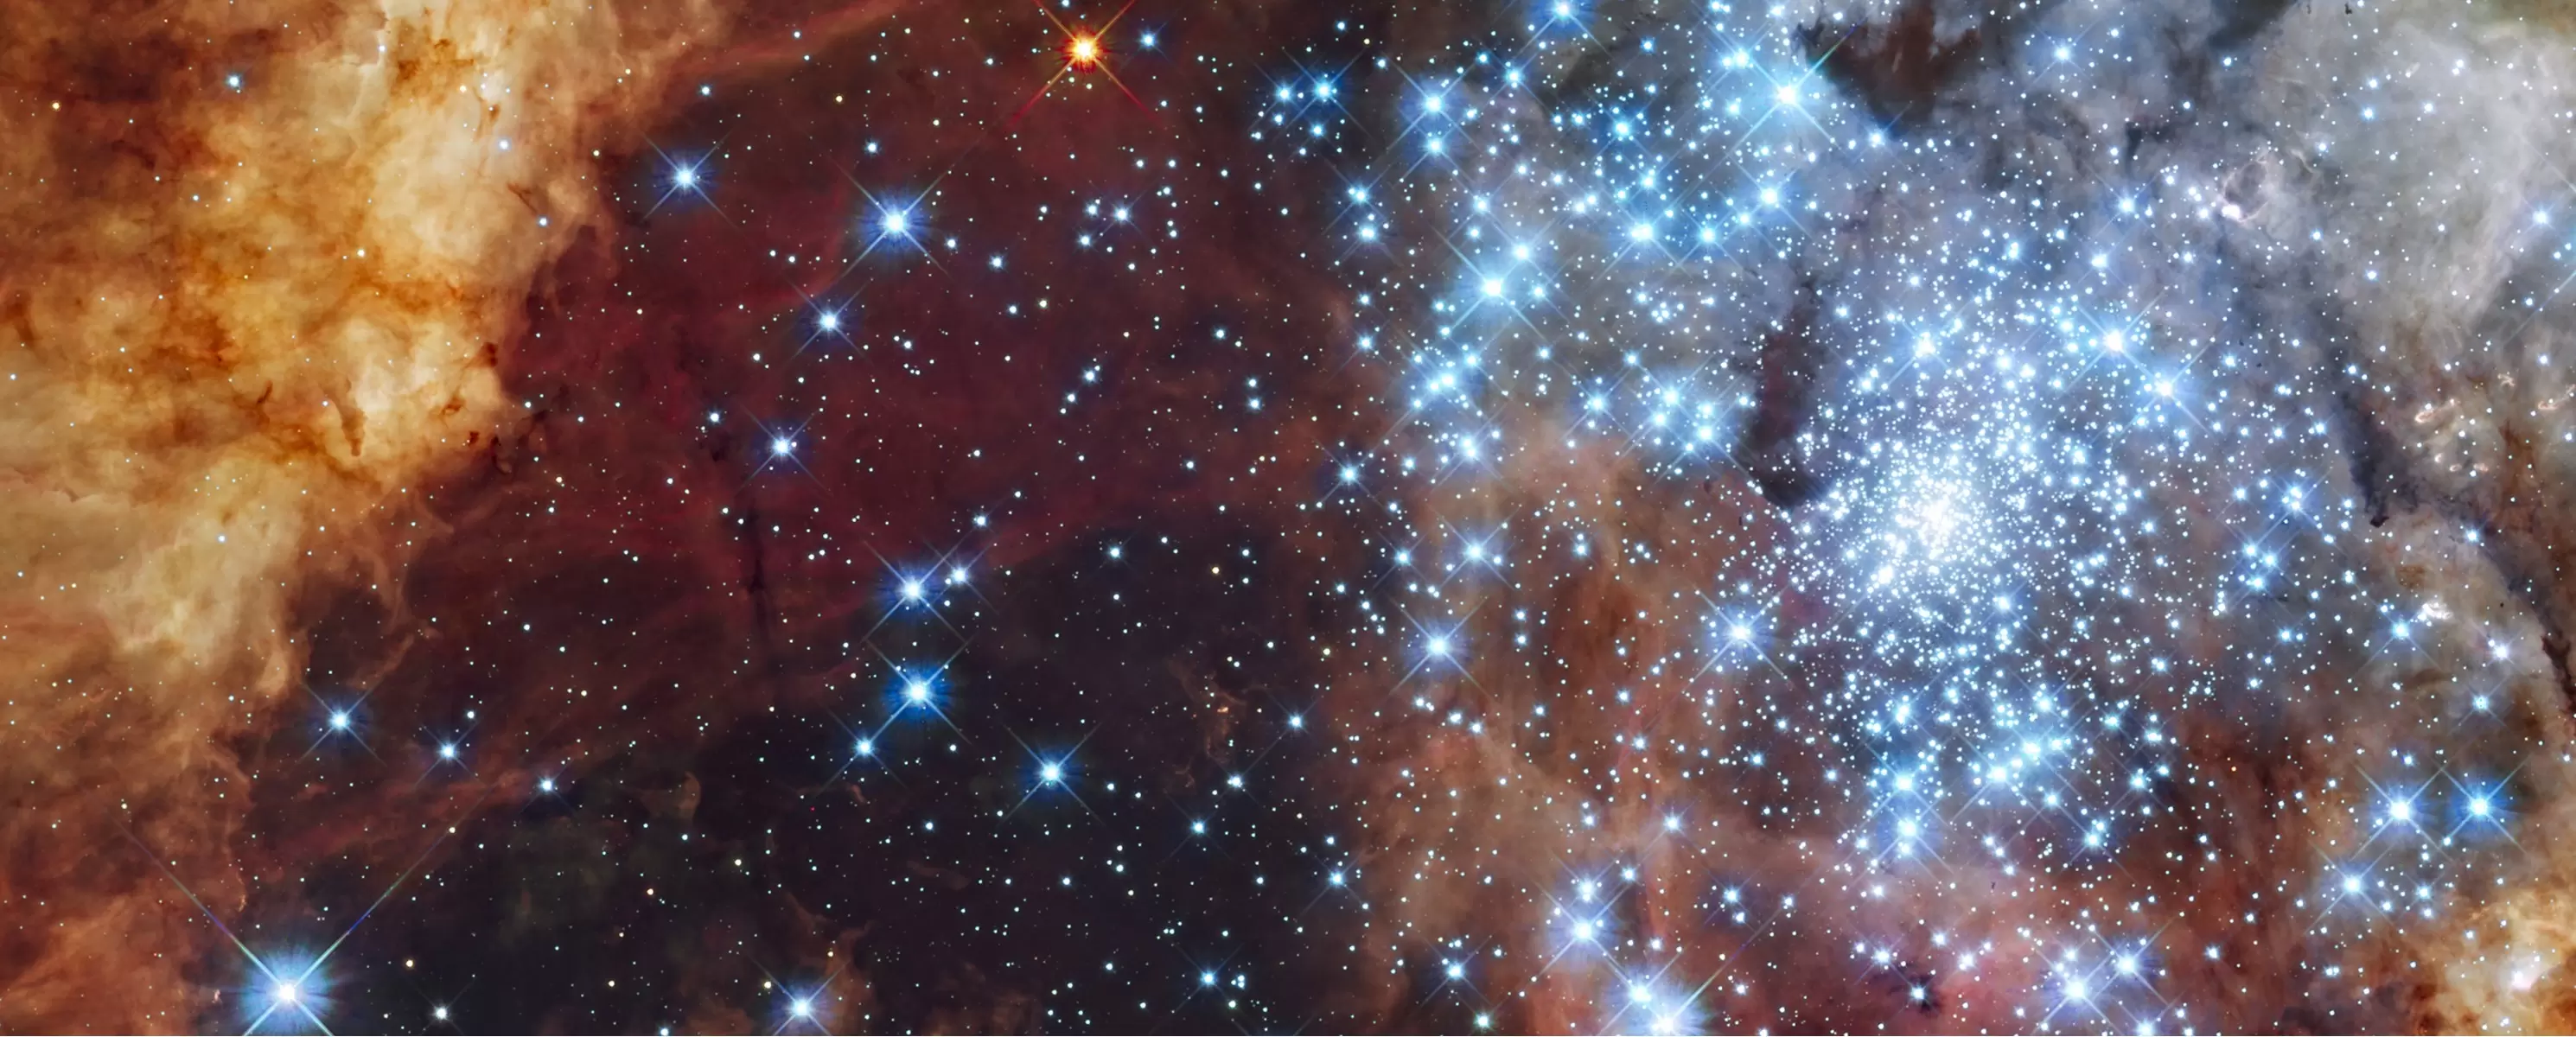 Galaxy - חלל - Artpicked- space - תמונות בחלקים  - מק''ט: 330551